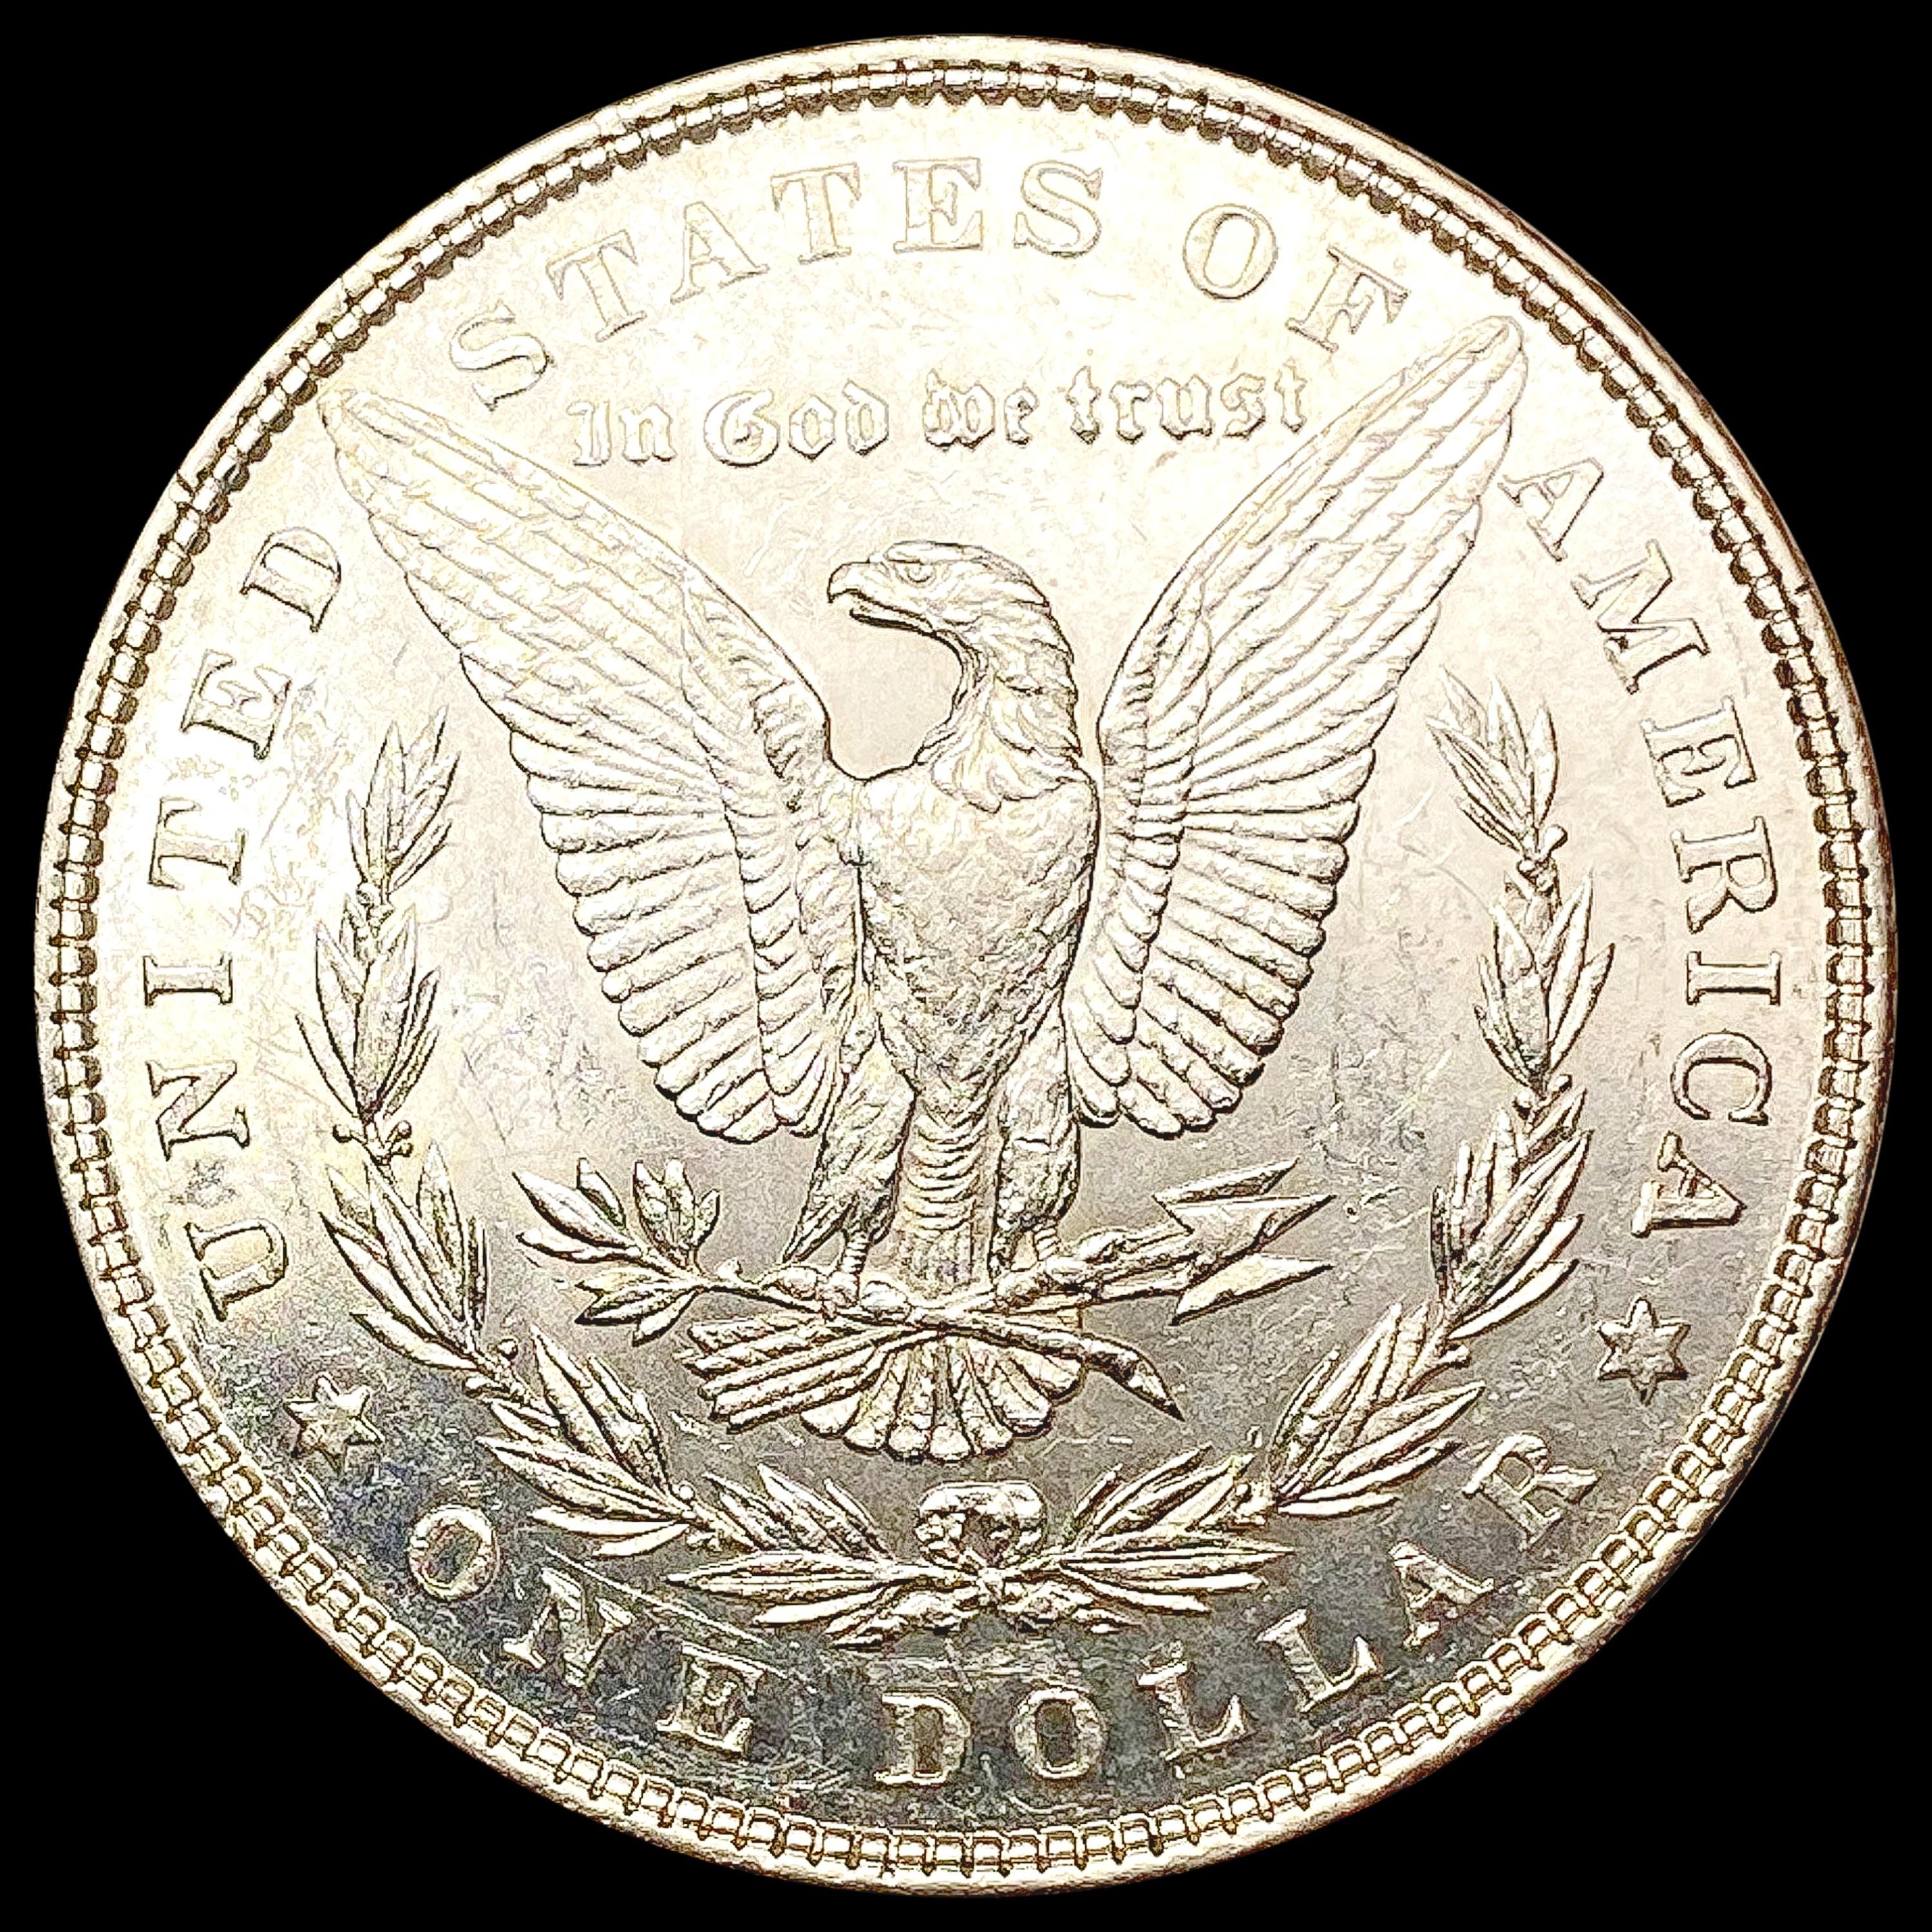 1878 7TF Rev 79 Morgan Silver Dollar UNCIRCULATED